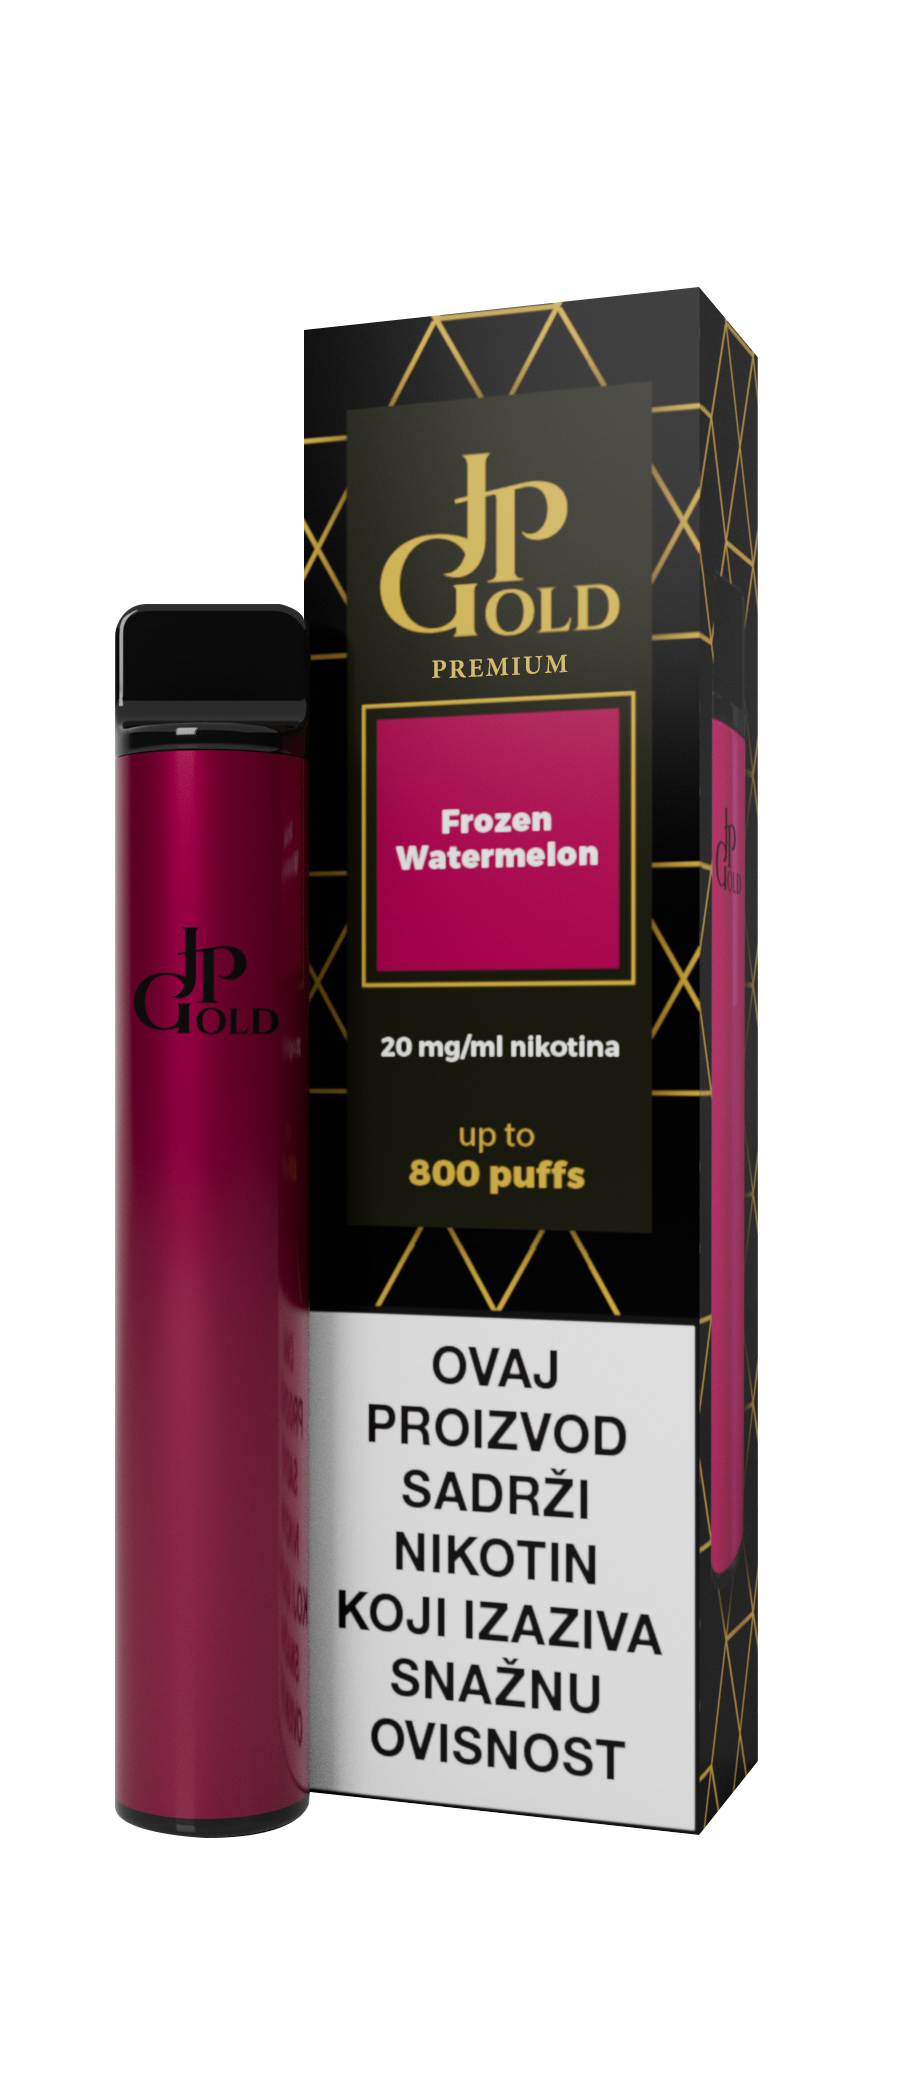 JP Gold Premium stick - Frozen watermelon - 20mg/ml